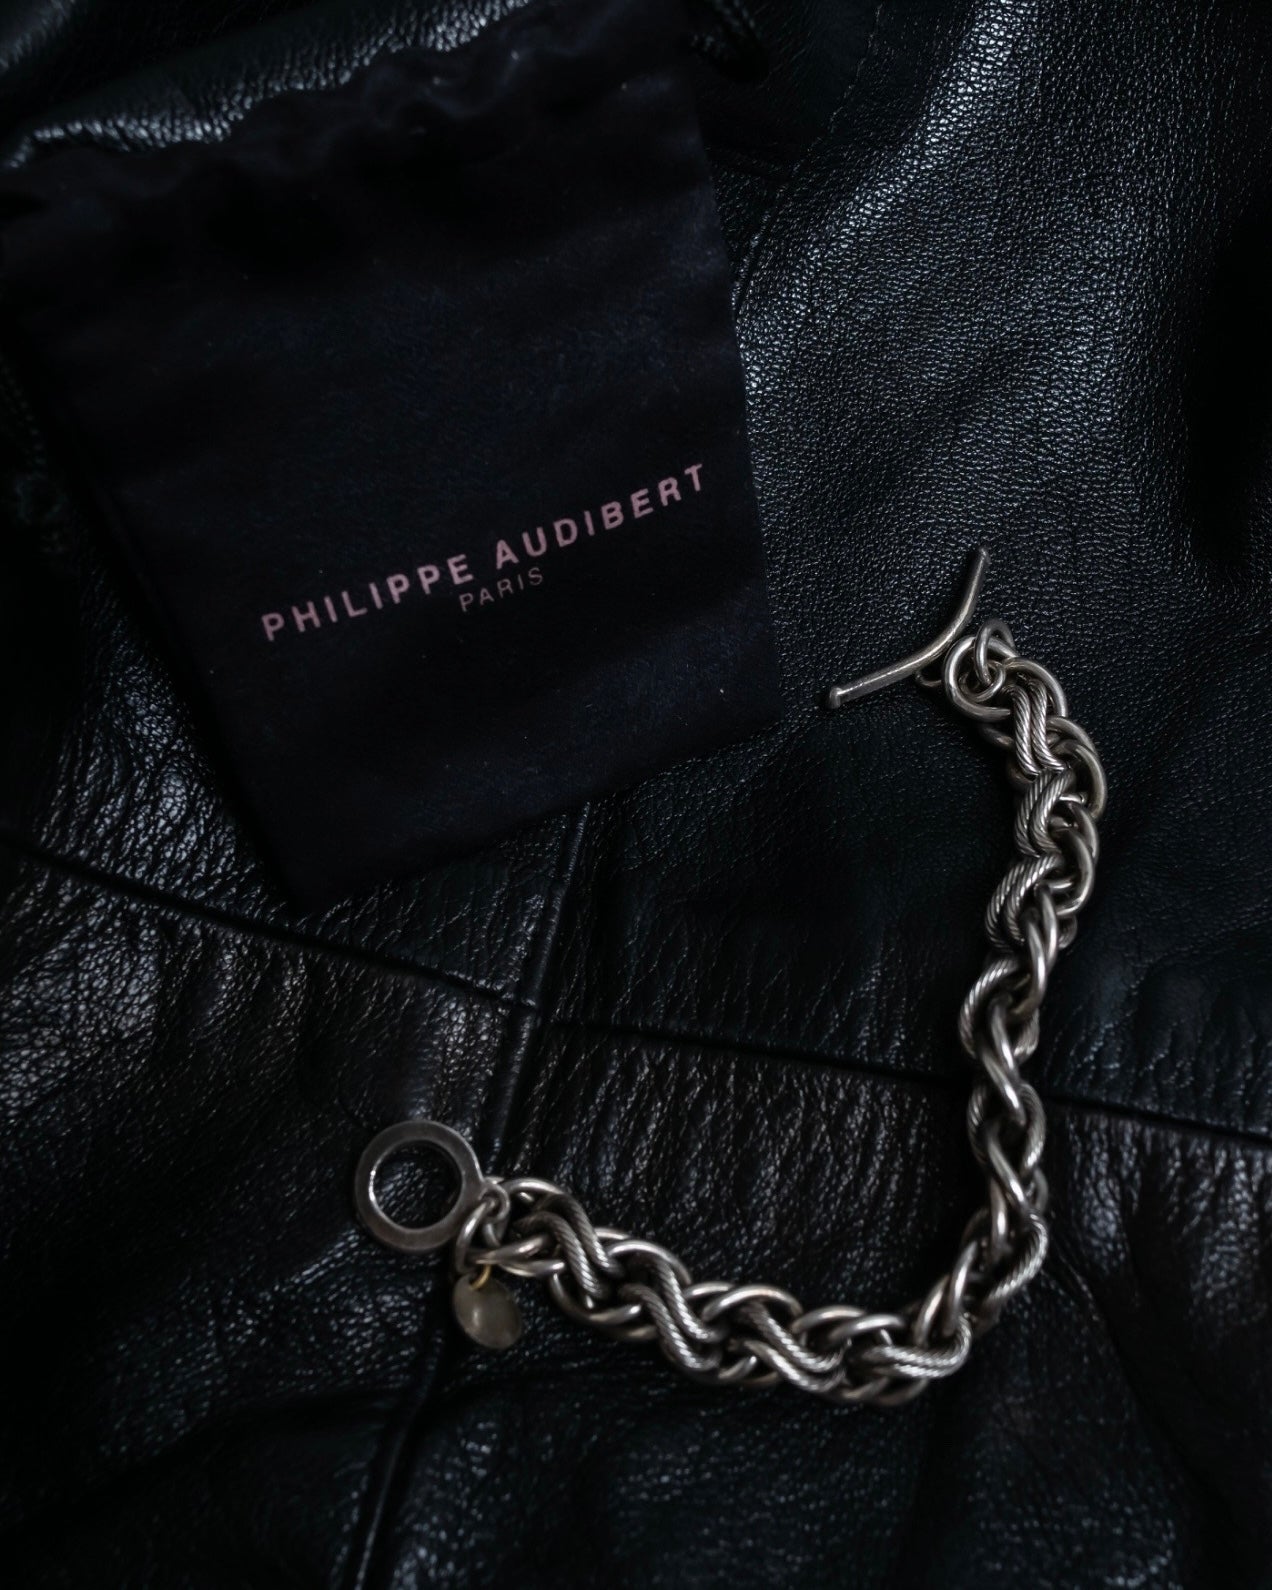 Philippe Audibert bracelet